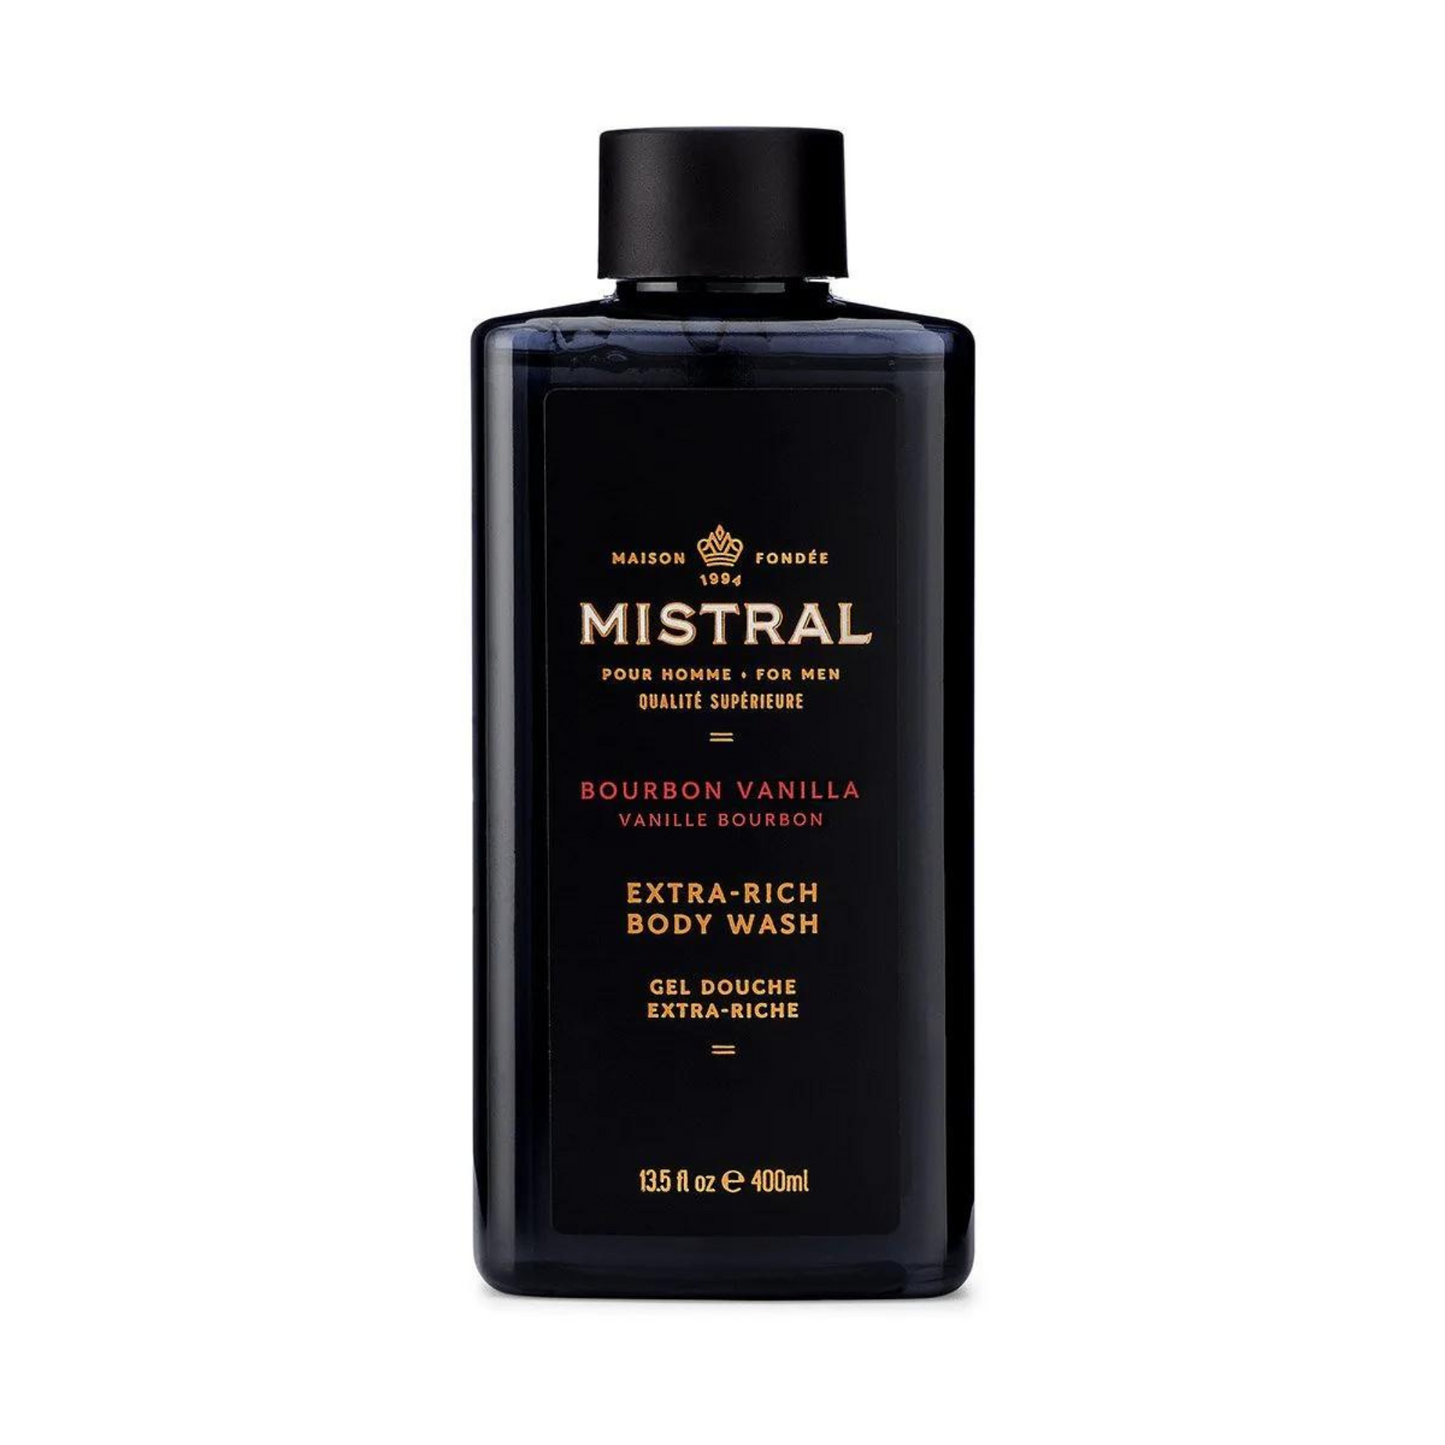 Primary Image of Mistral Bourbon Vanilla Body Wash (13.5 fl oz)